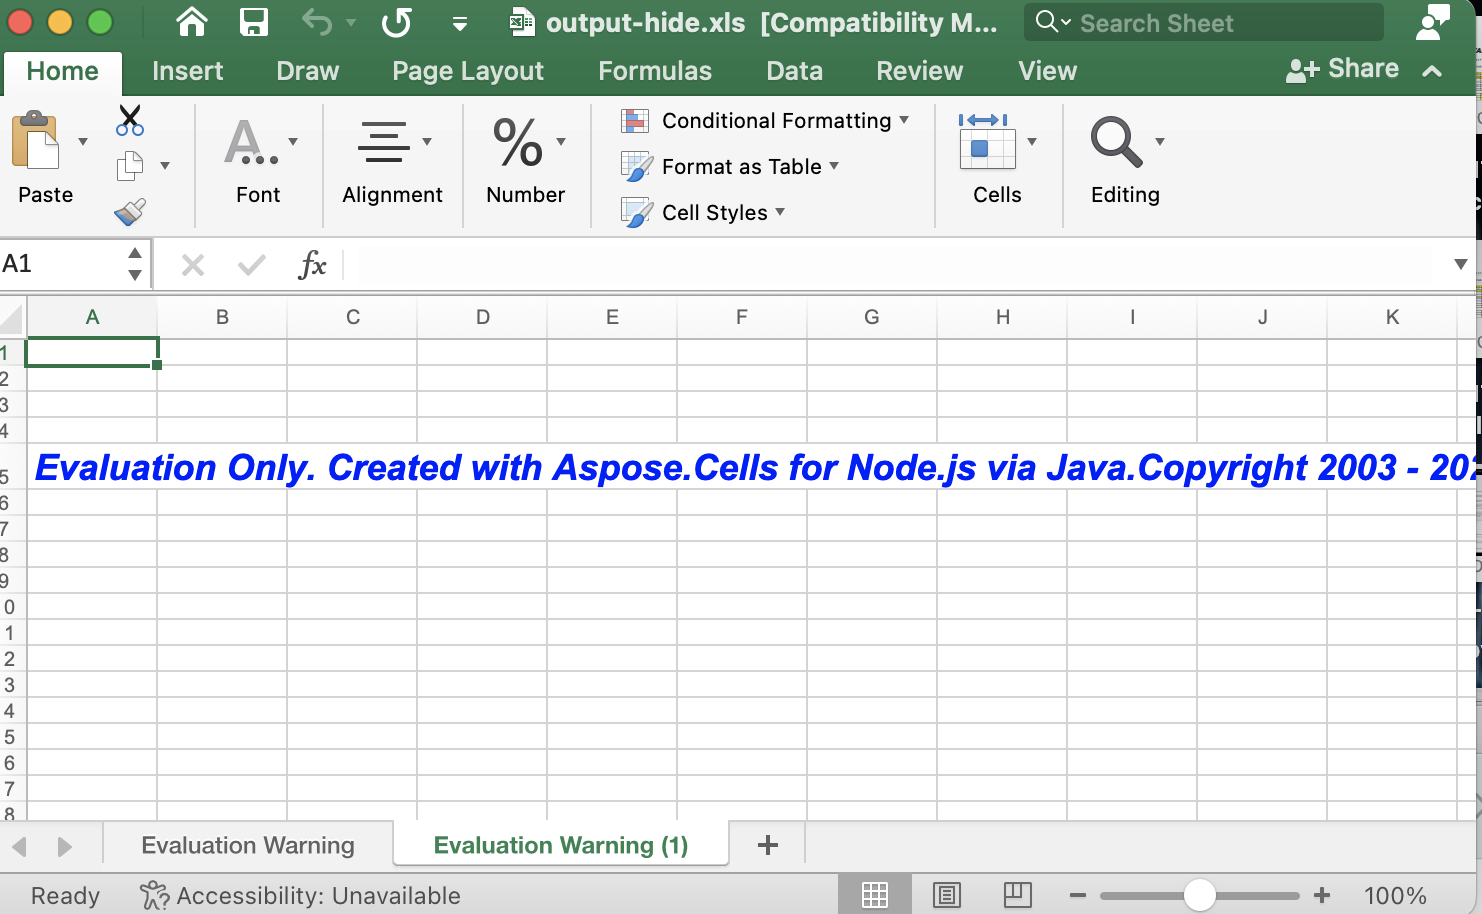 Unhide Sheets in Excel